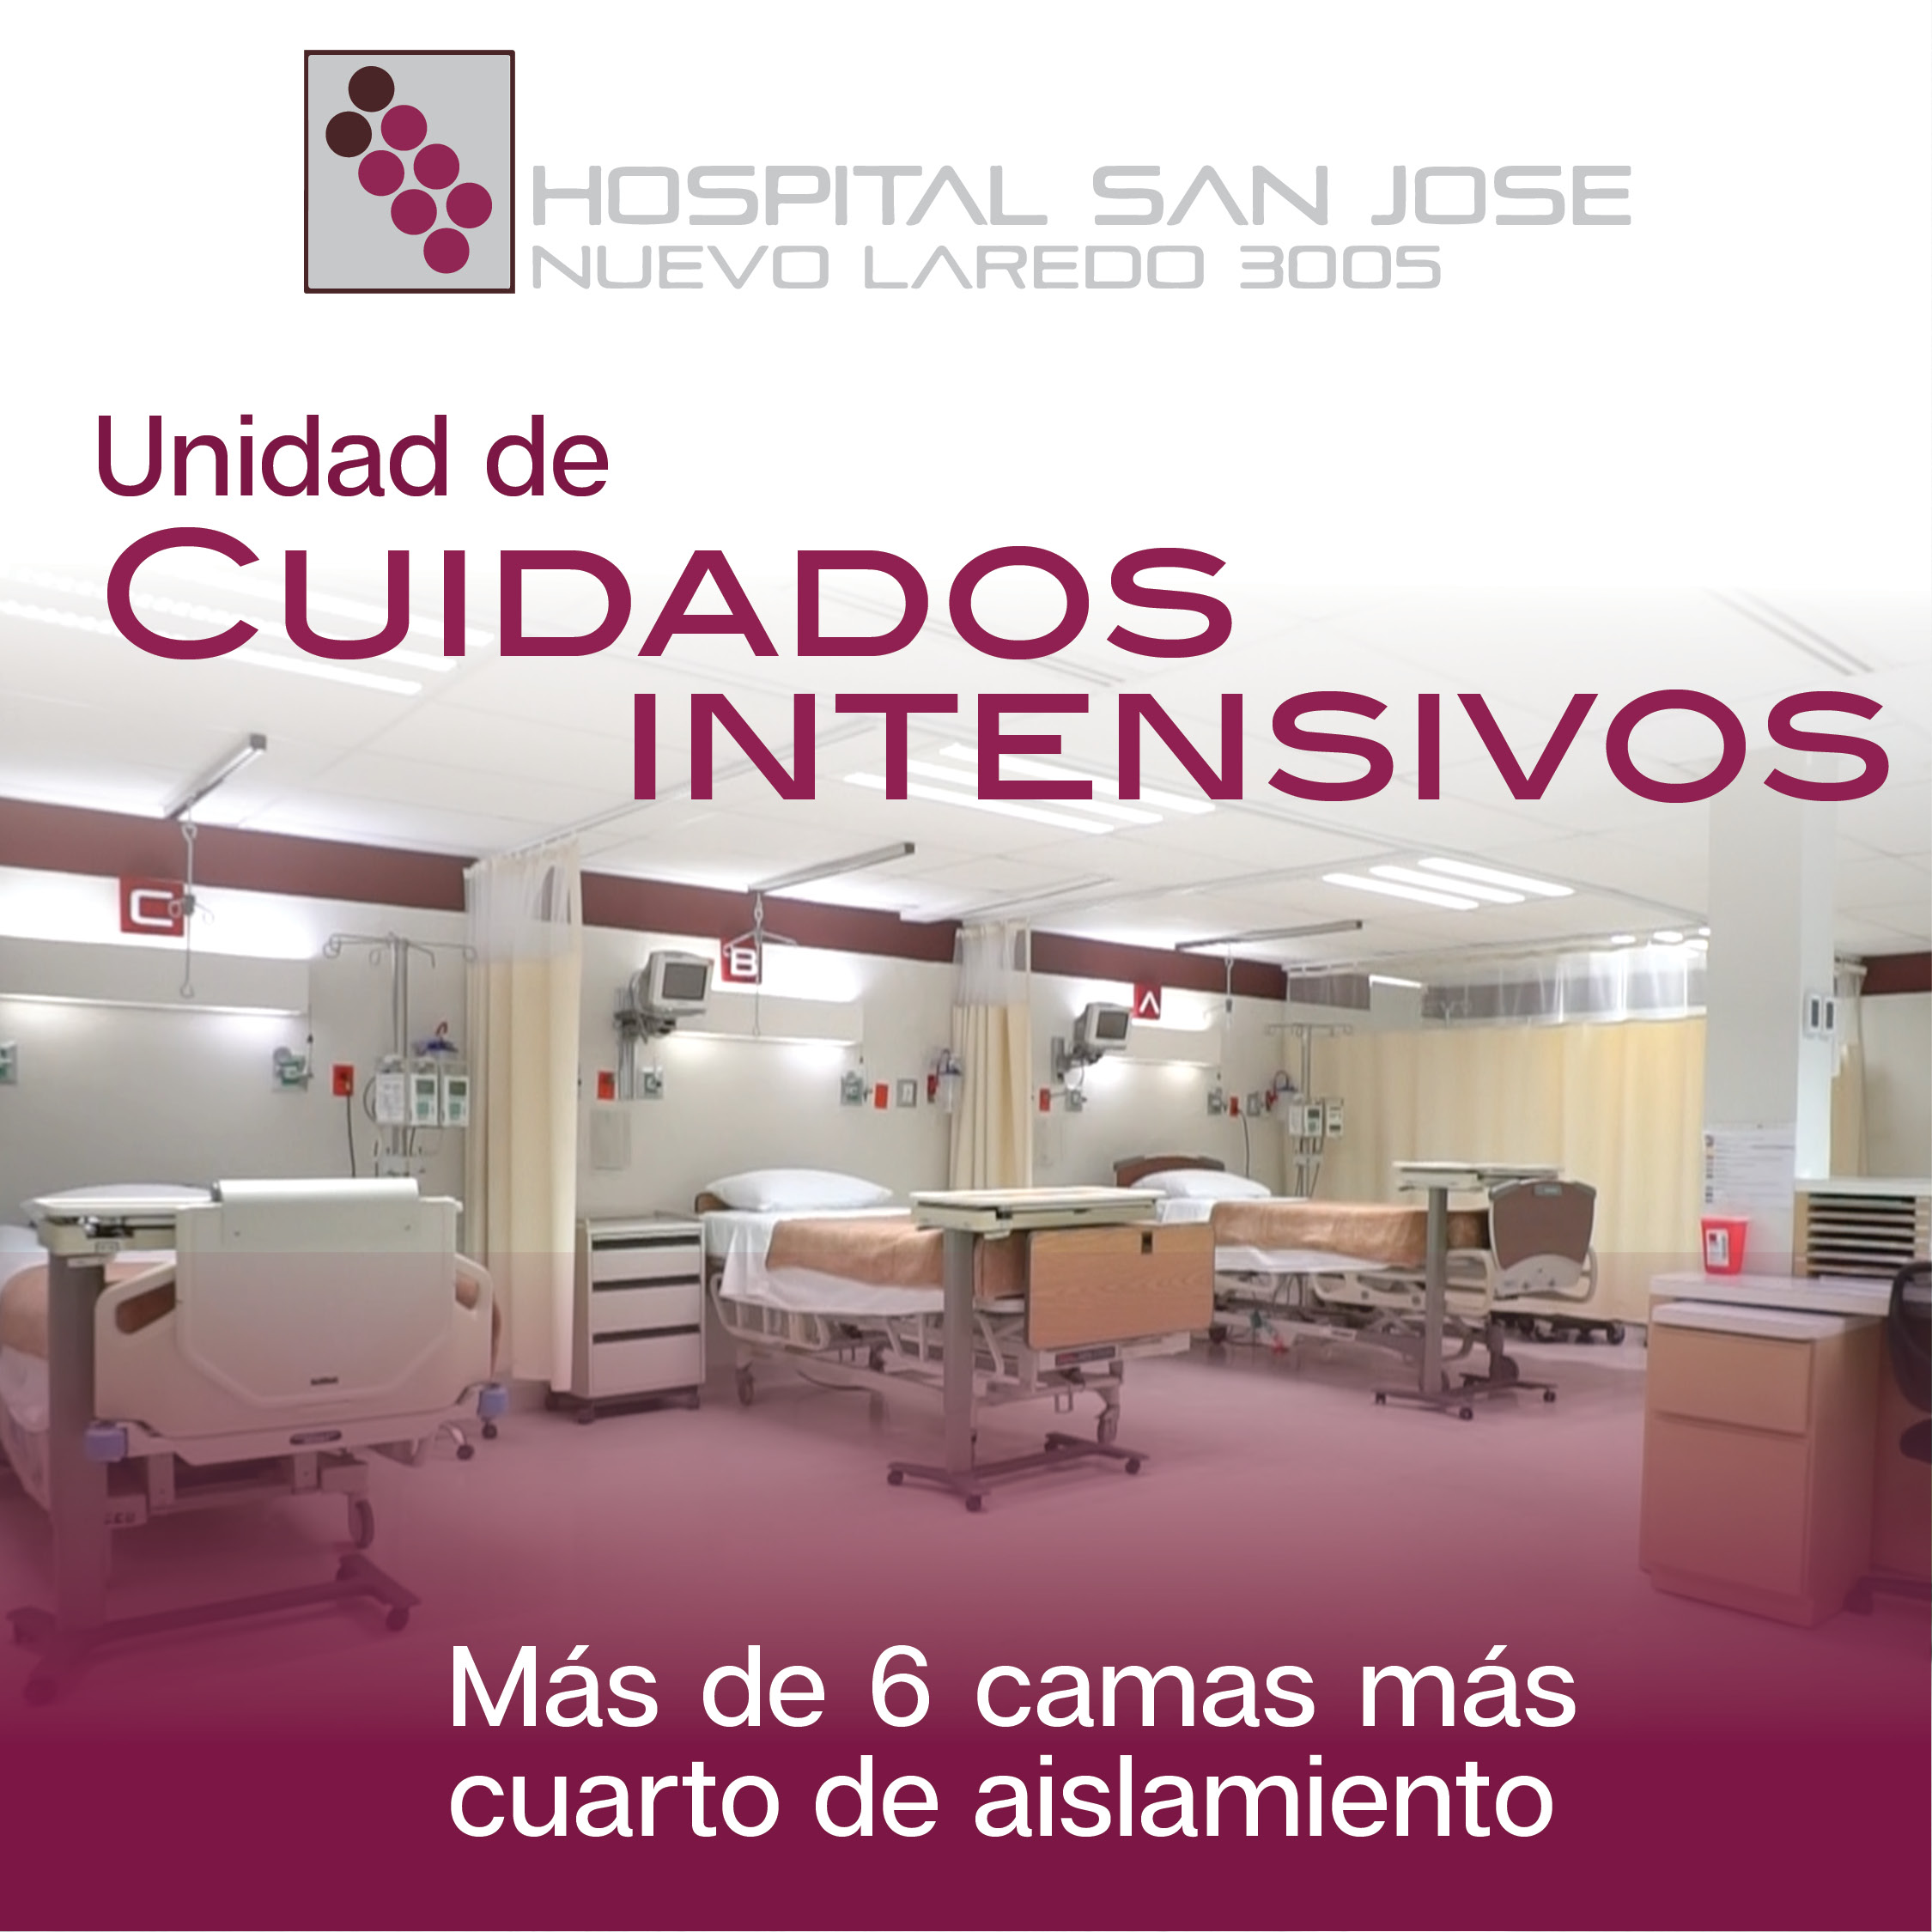 Hospital San Jose, cuidados intensivos